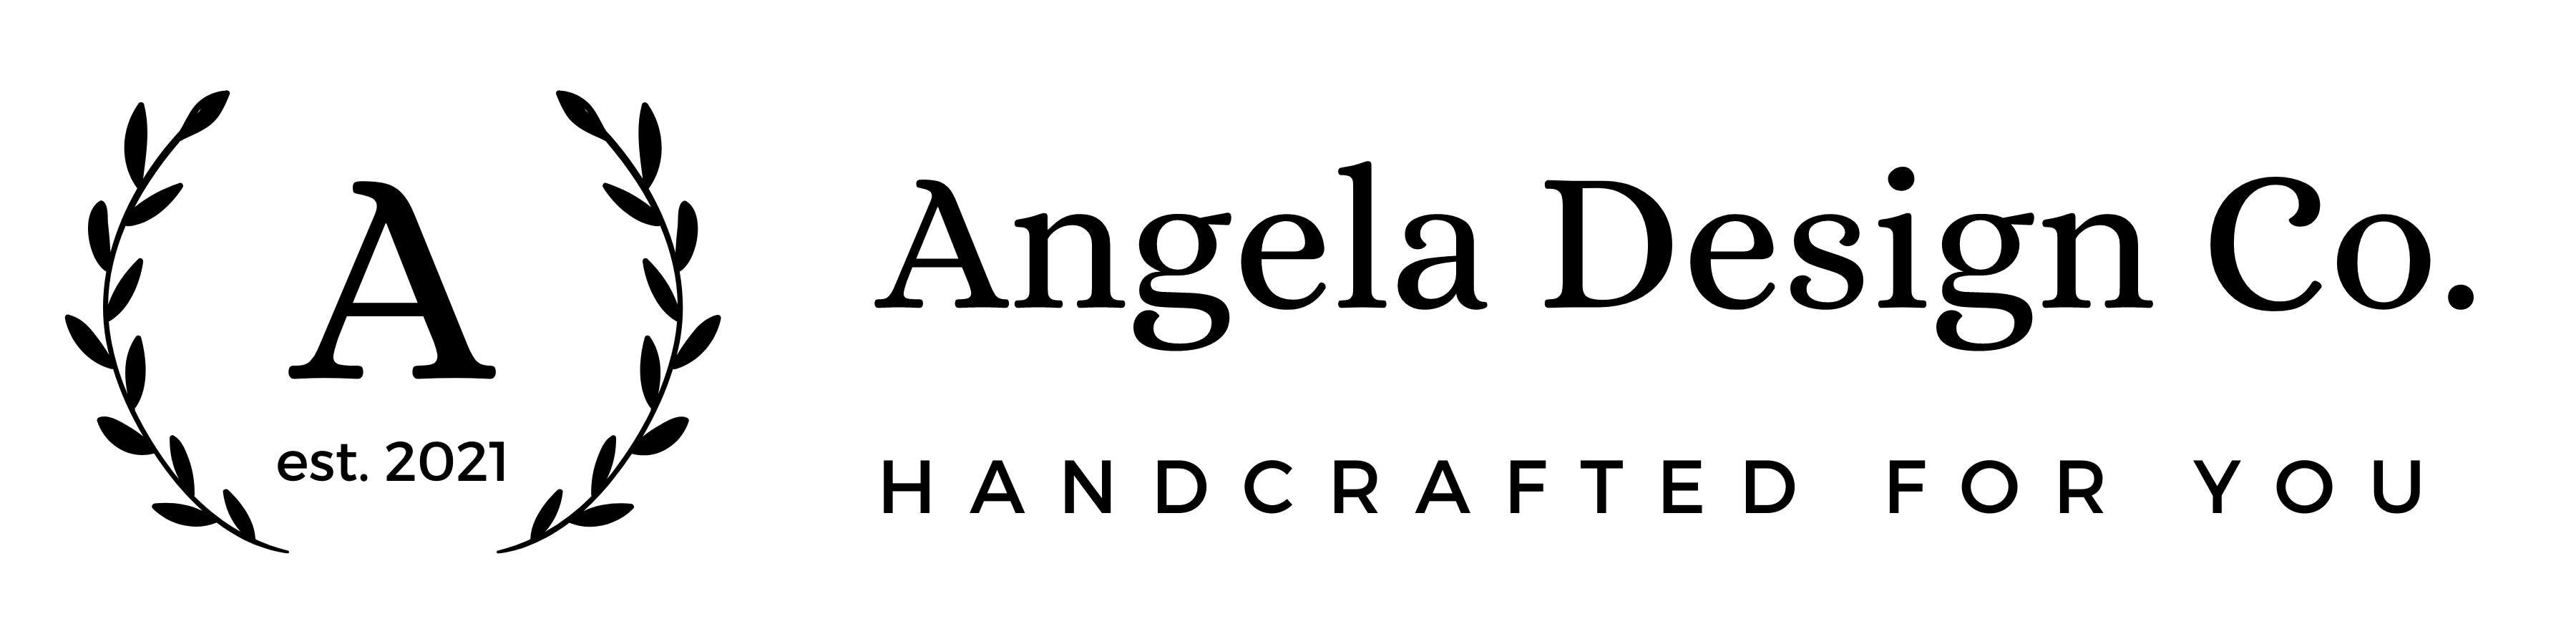 Angela Design Co.